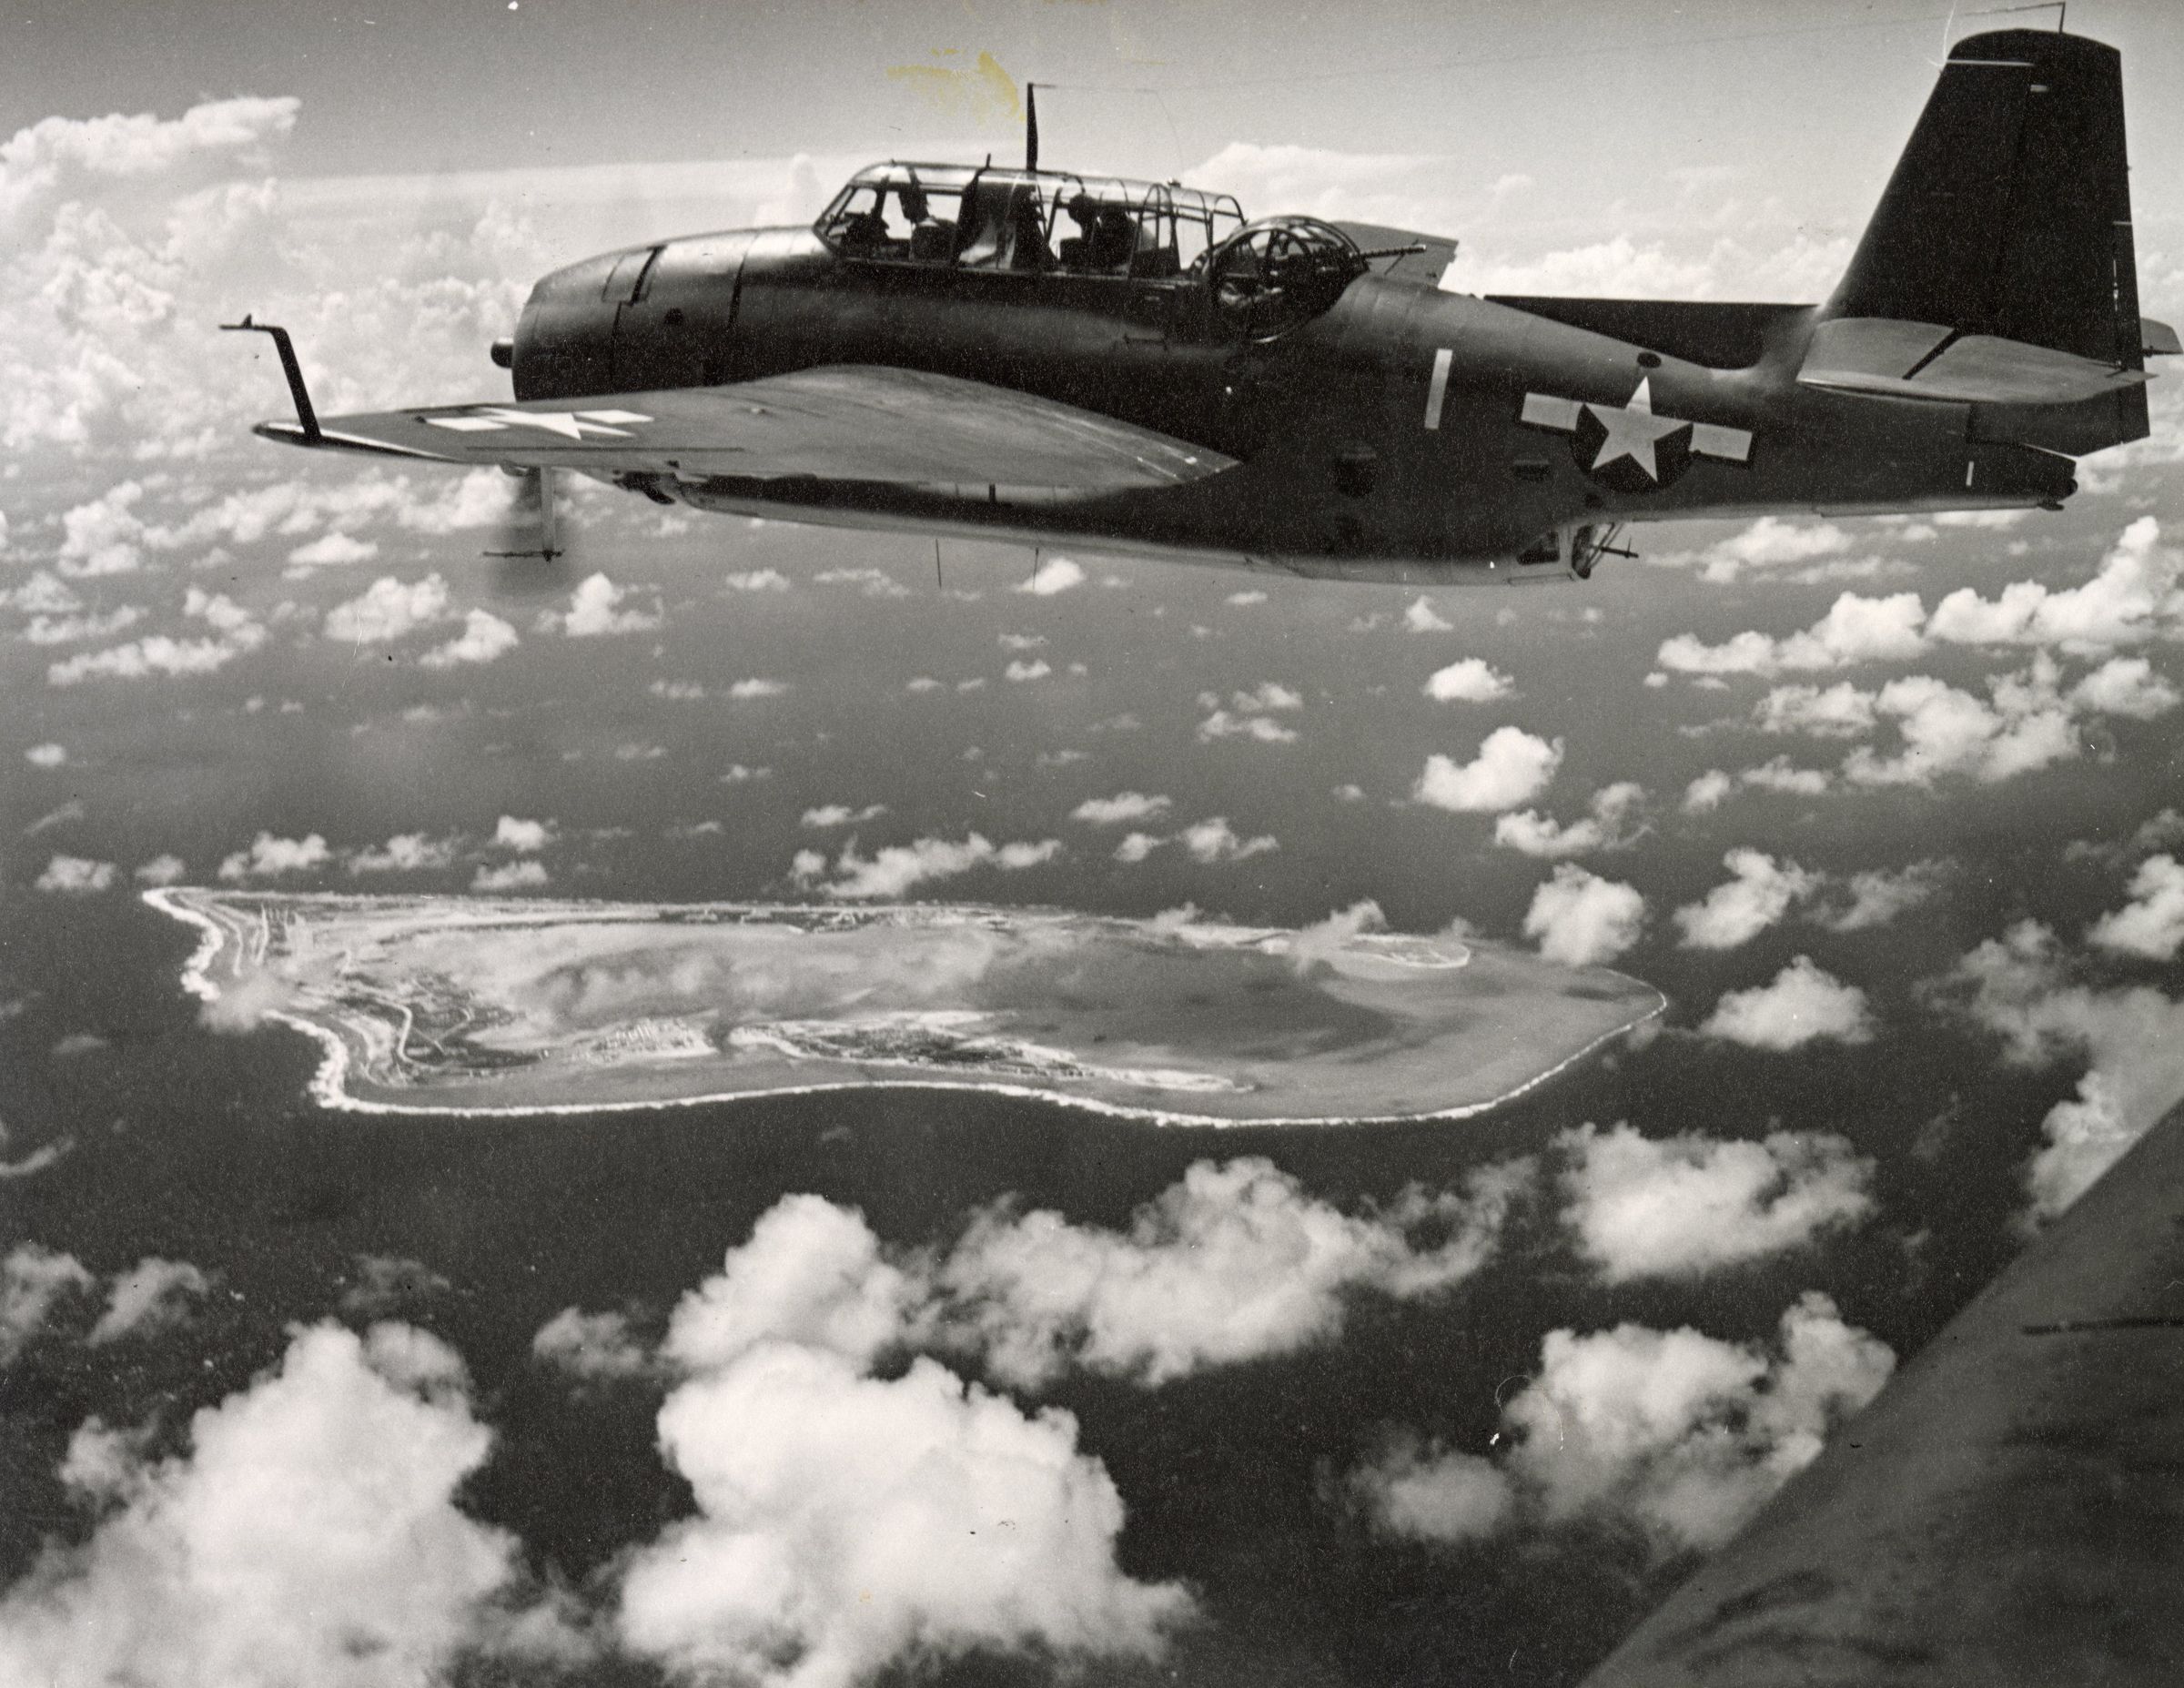 Primary Image of Joseph Kristufek Flying Over Wake Island